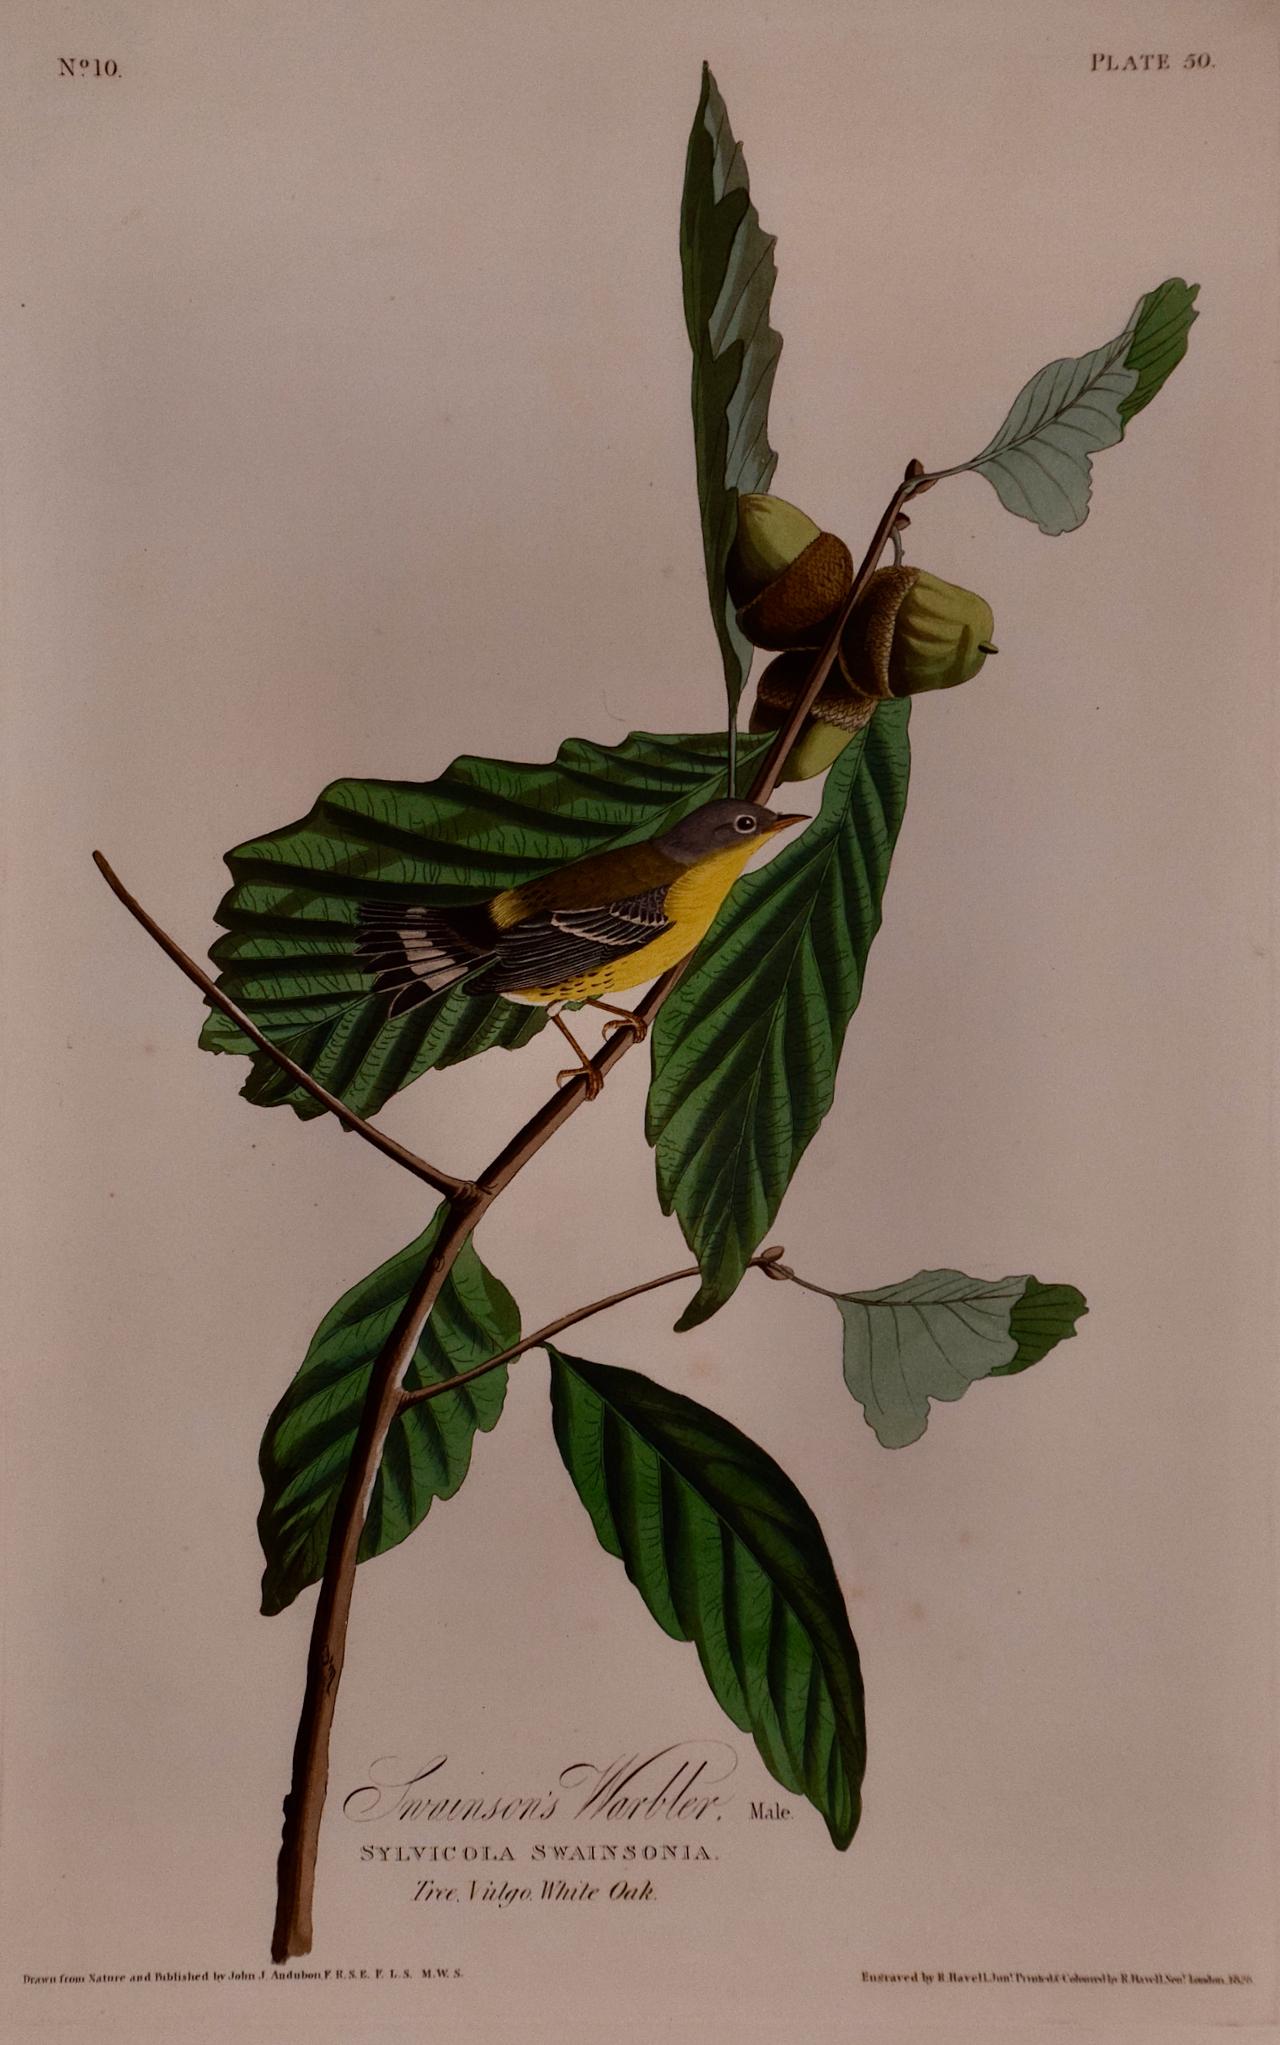 Swainson's Warbler: A Framed Original Hand-colored Audubon Folio Bird Engraving  - Print by John James Audubon